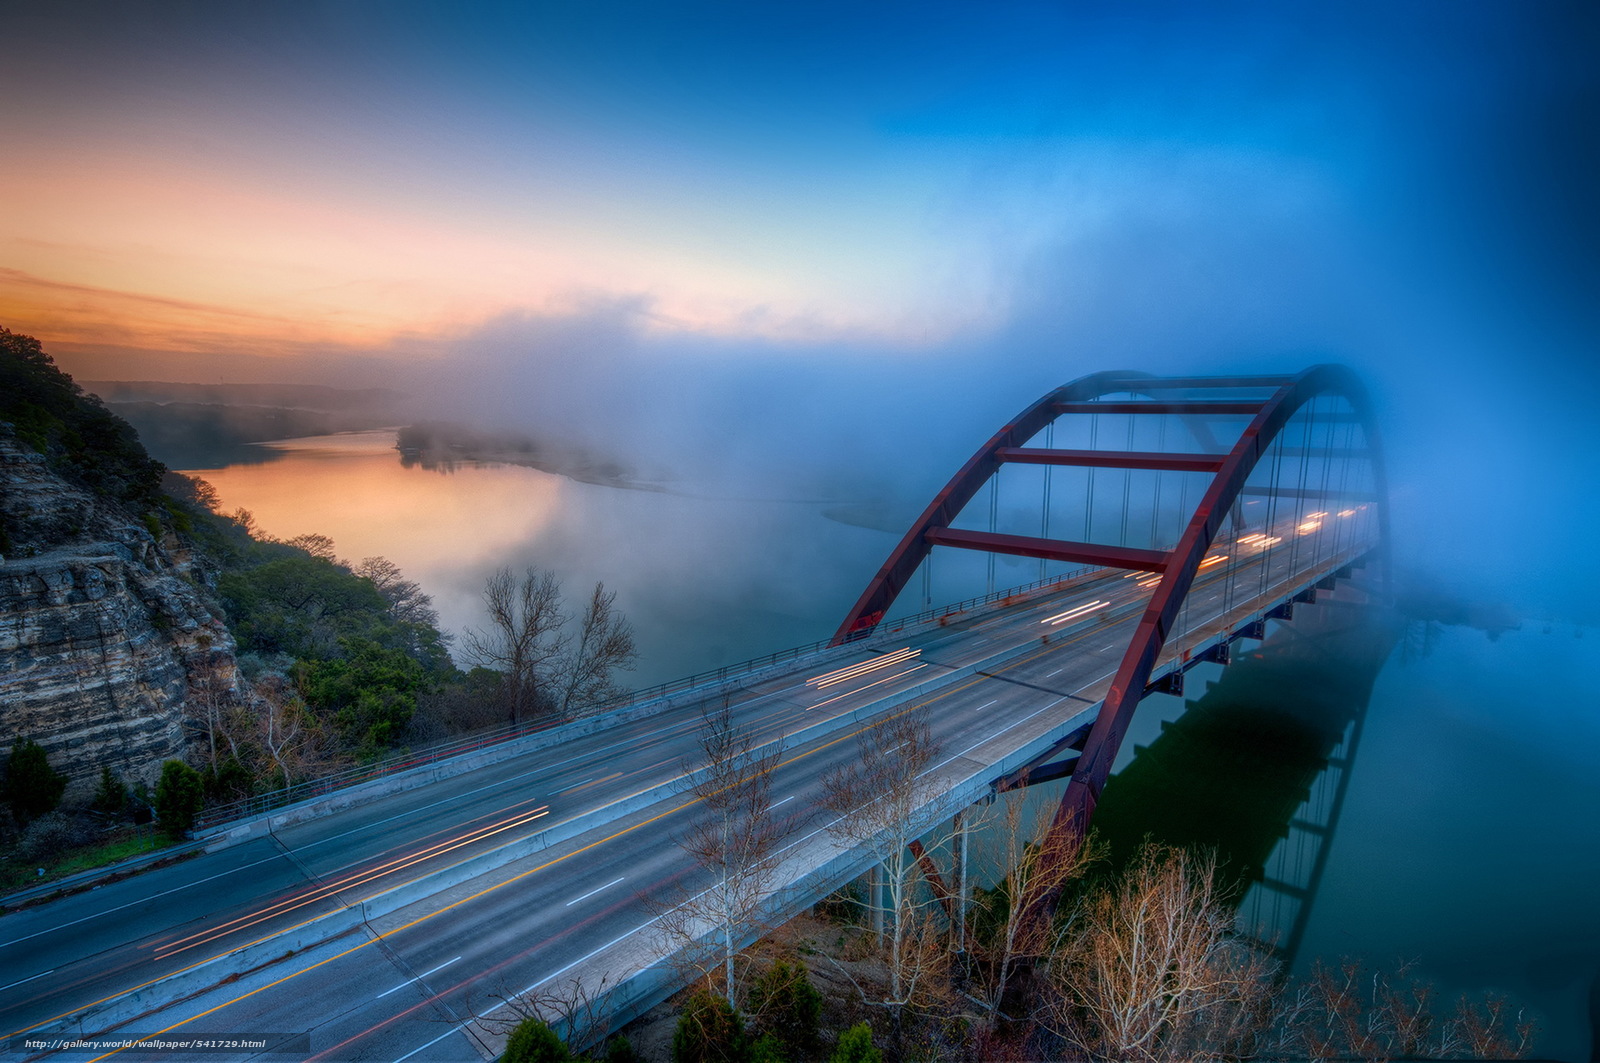 Download wallpaper Morning Fog Pennybacker Bridge austin texas free